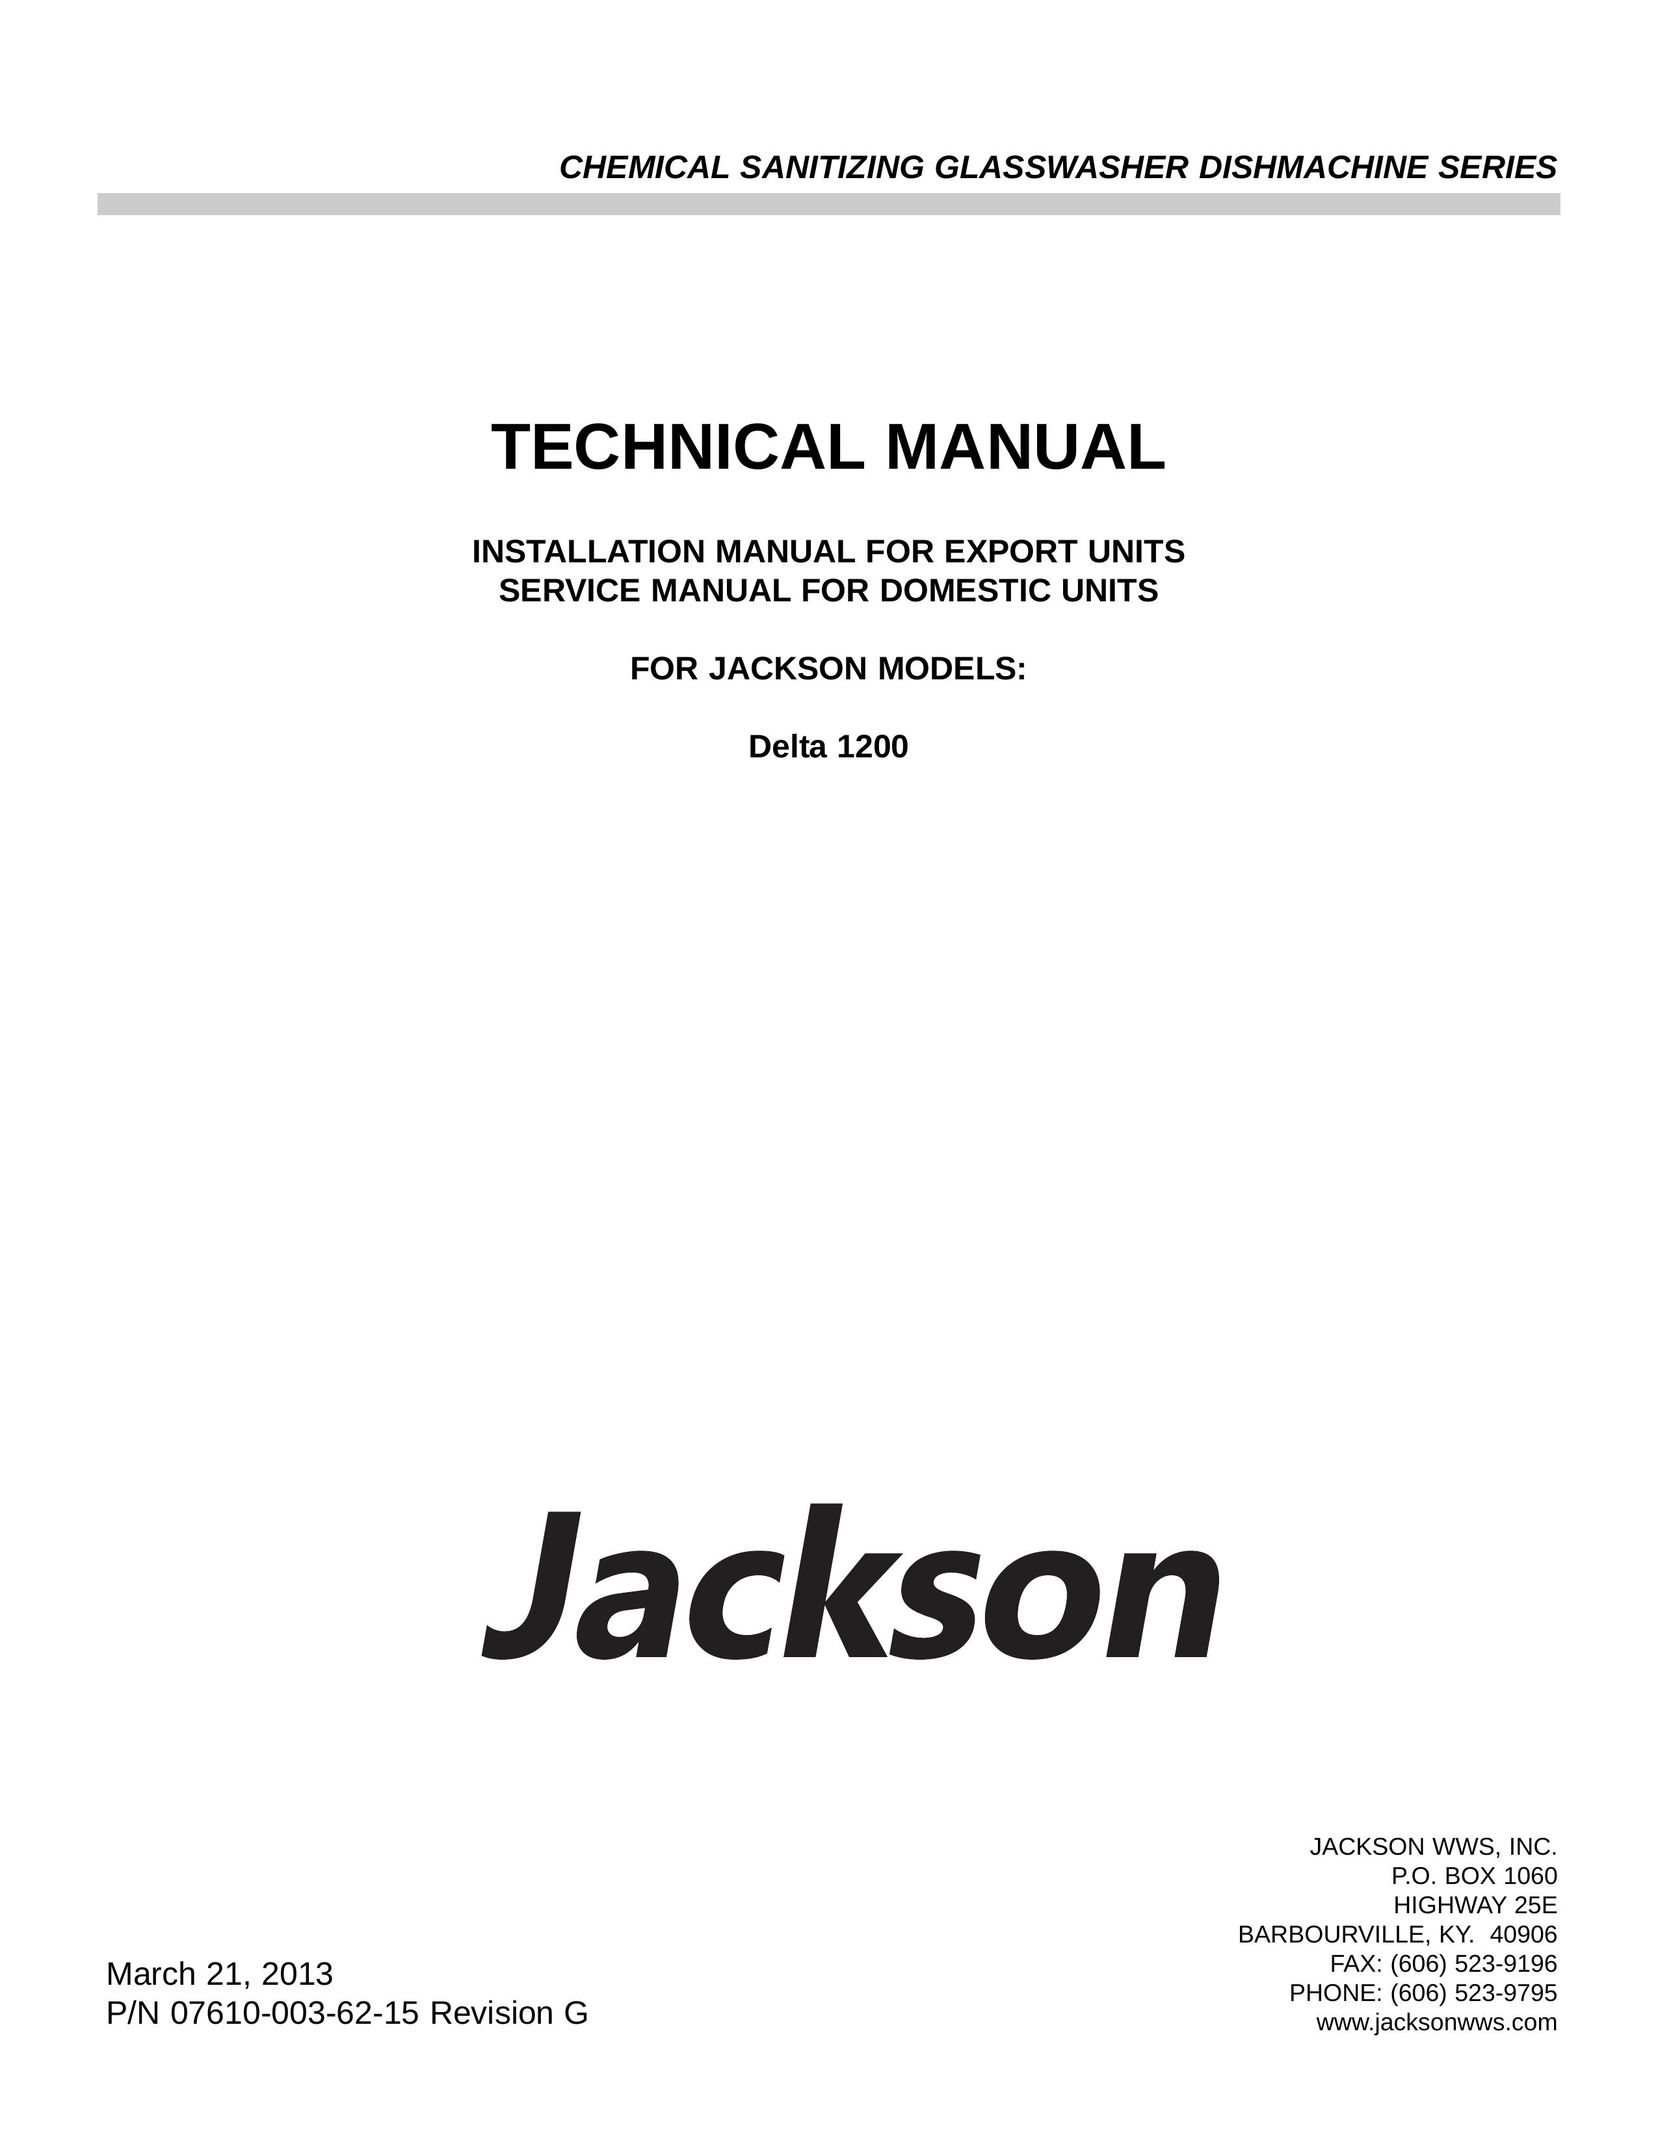 Jackson Chemical Sanitizing Glasswasher Dishmachine Series Model Vehicle User Manual